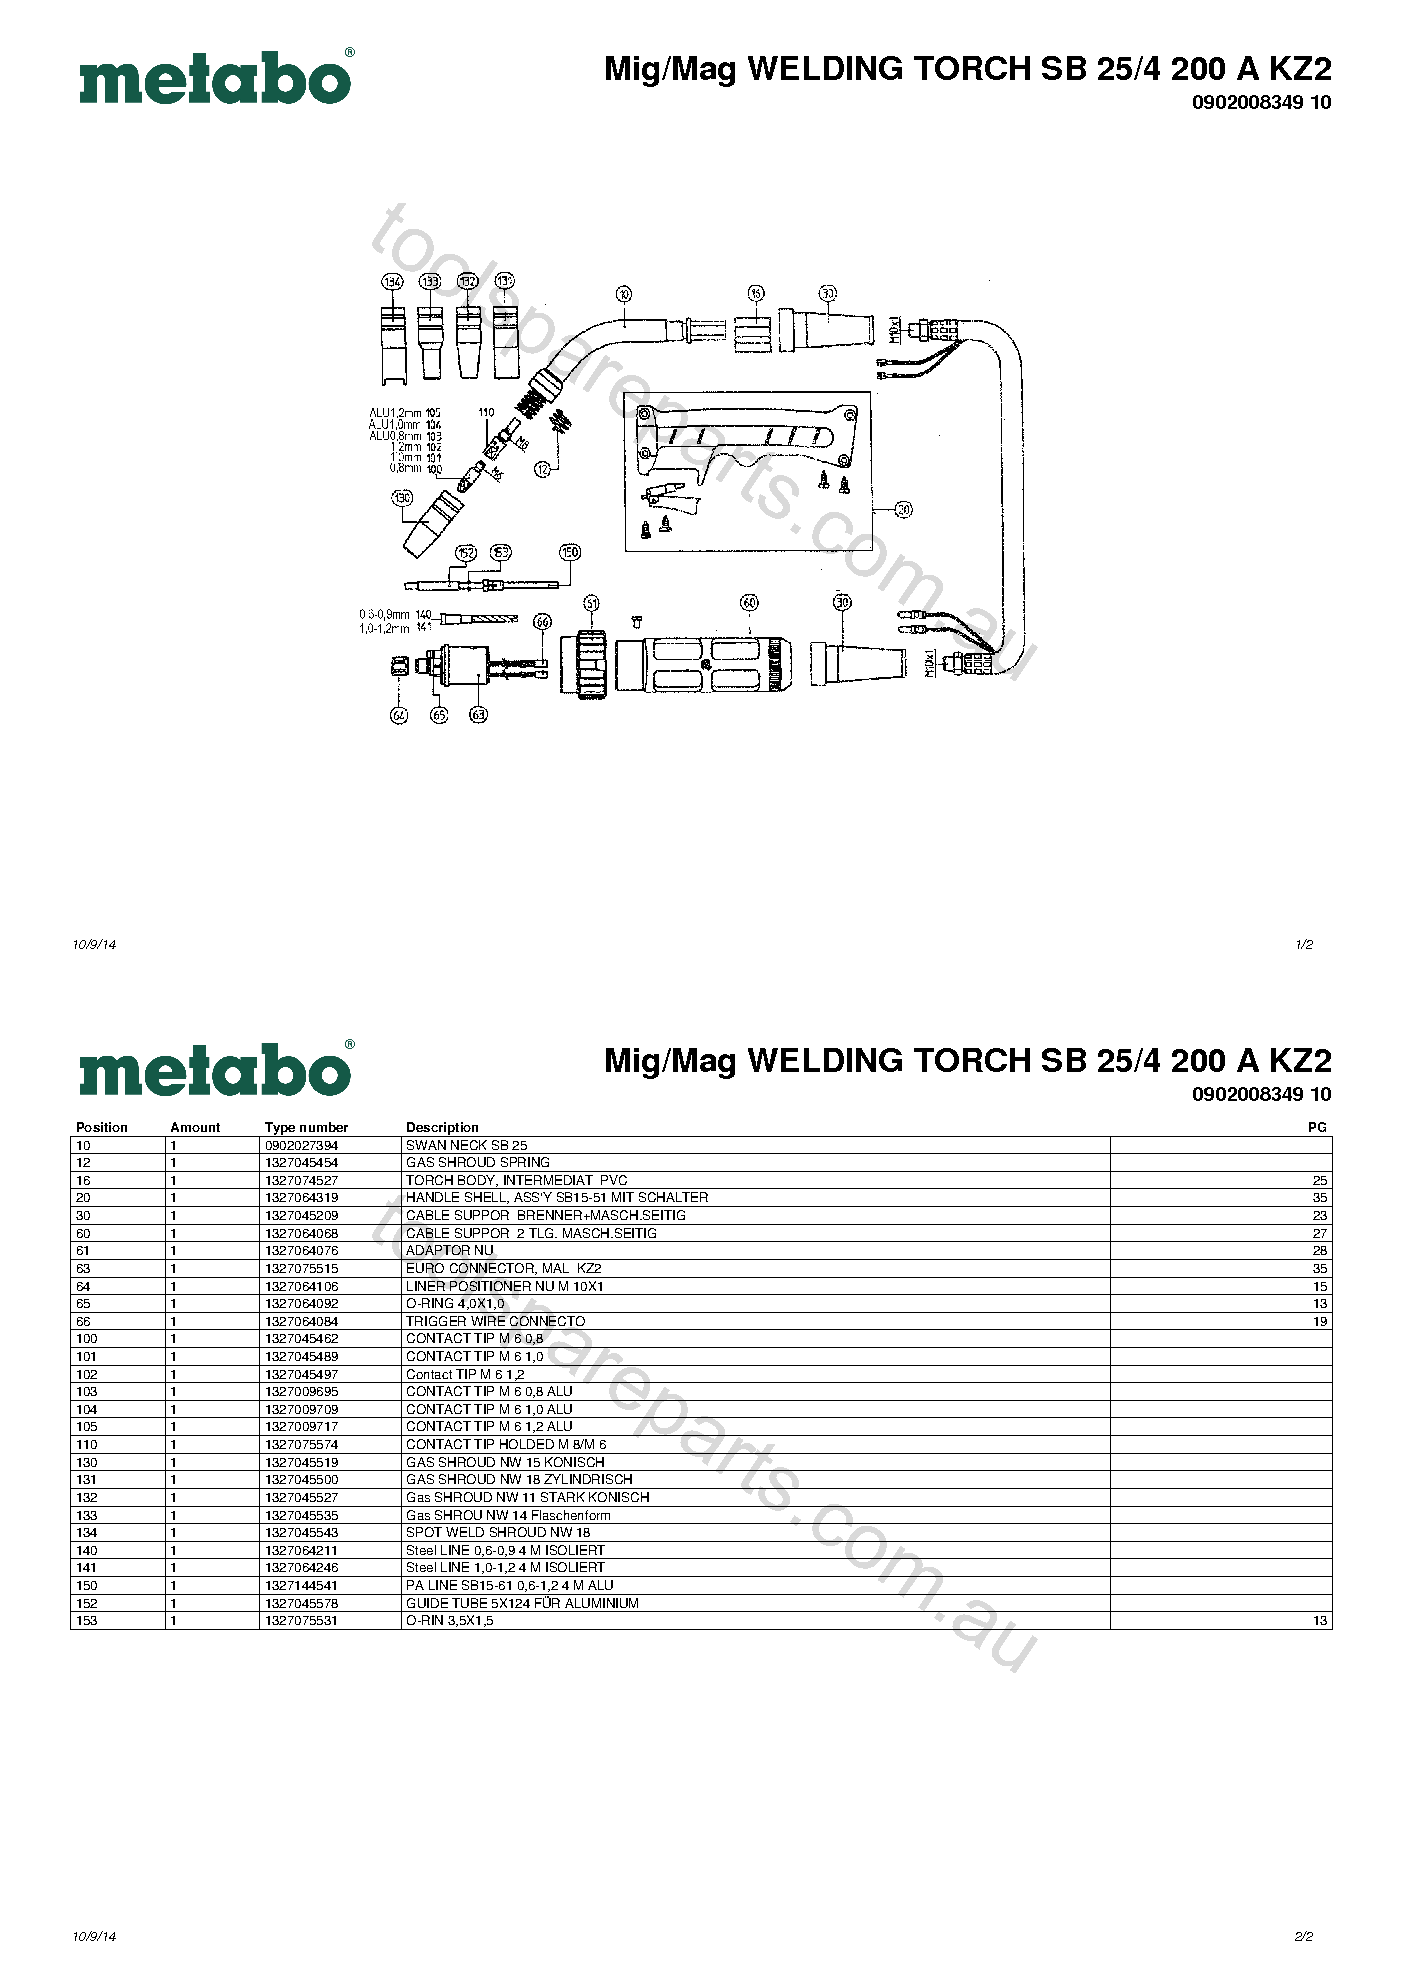 Metabo Mig/Mag WELDING TORCH SB 25/4 200 A KZ2 0902008349 10  Diagram 1